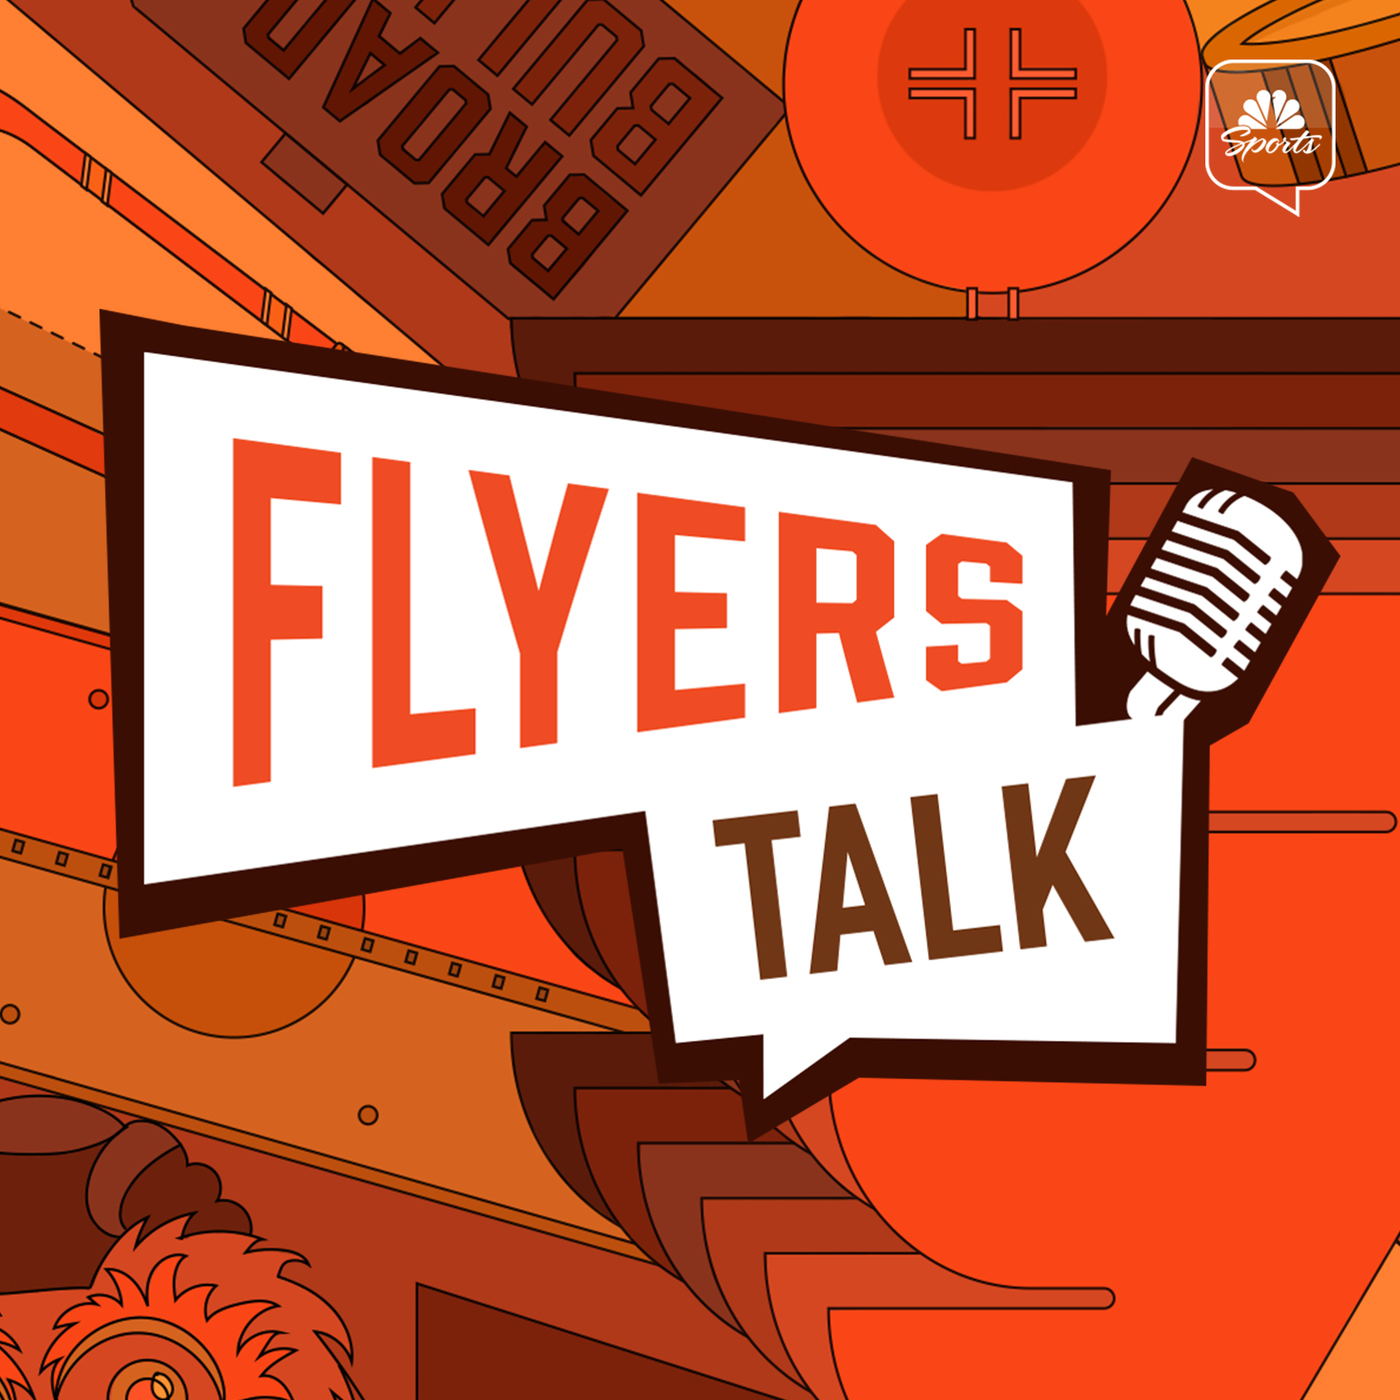 John Tortorella ups the urgency as Flyers' playoff push heightens